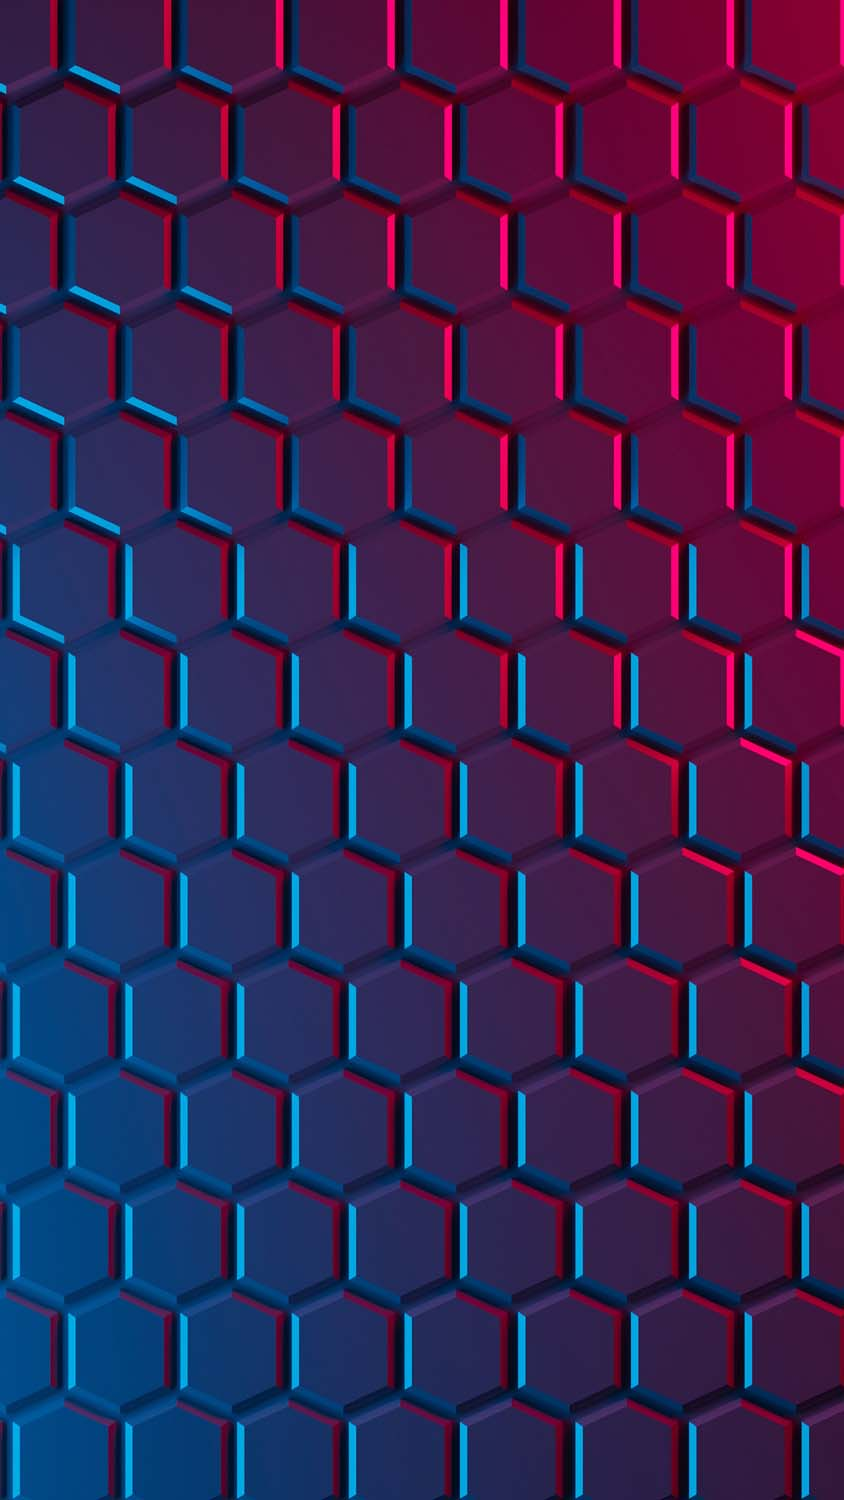 3D Hexagon IPhone Wallpaper HD  IPhone Wallpapers